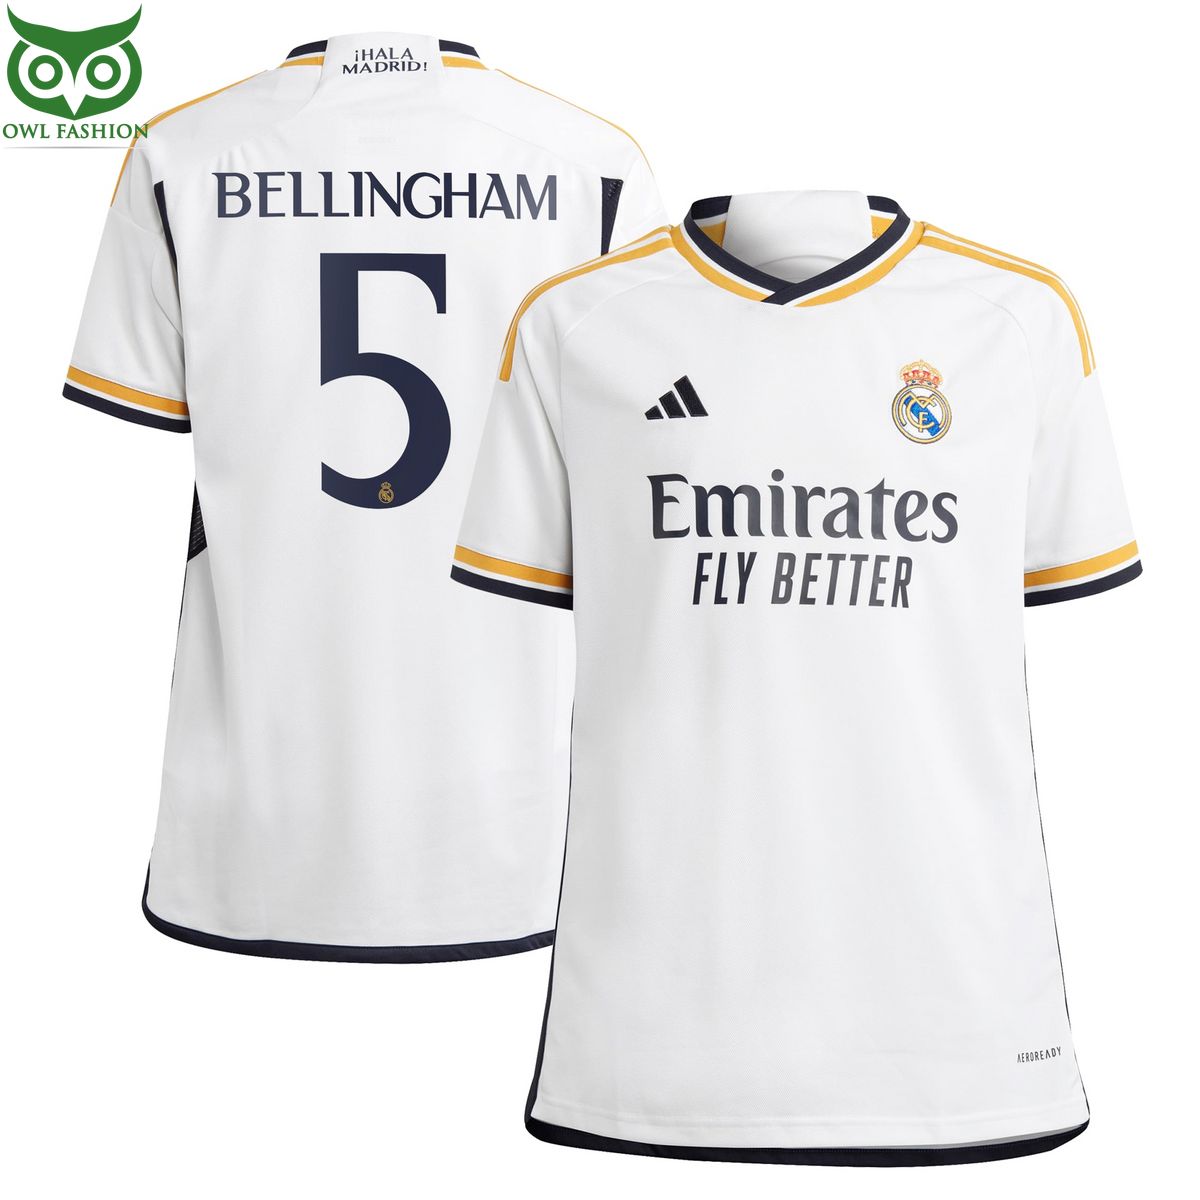 bellingham real madrid football soccer jersey shirt white version Shop Owl Fashion